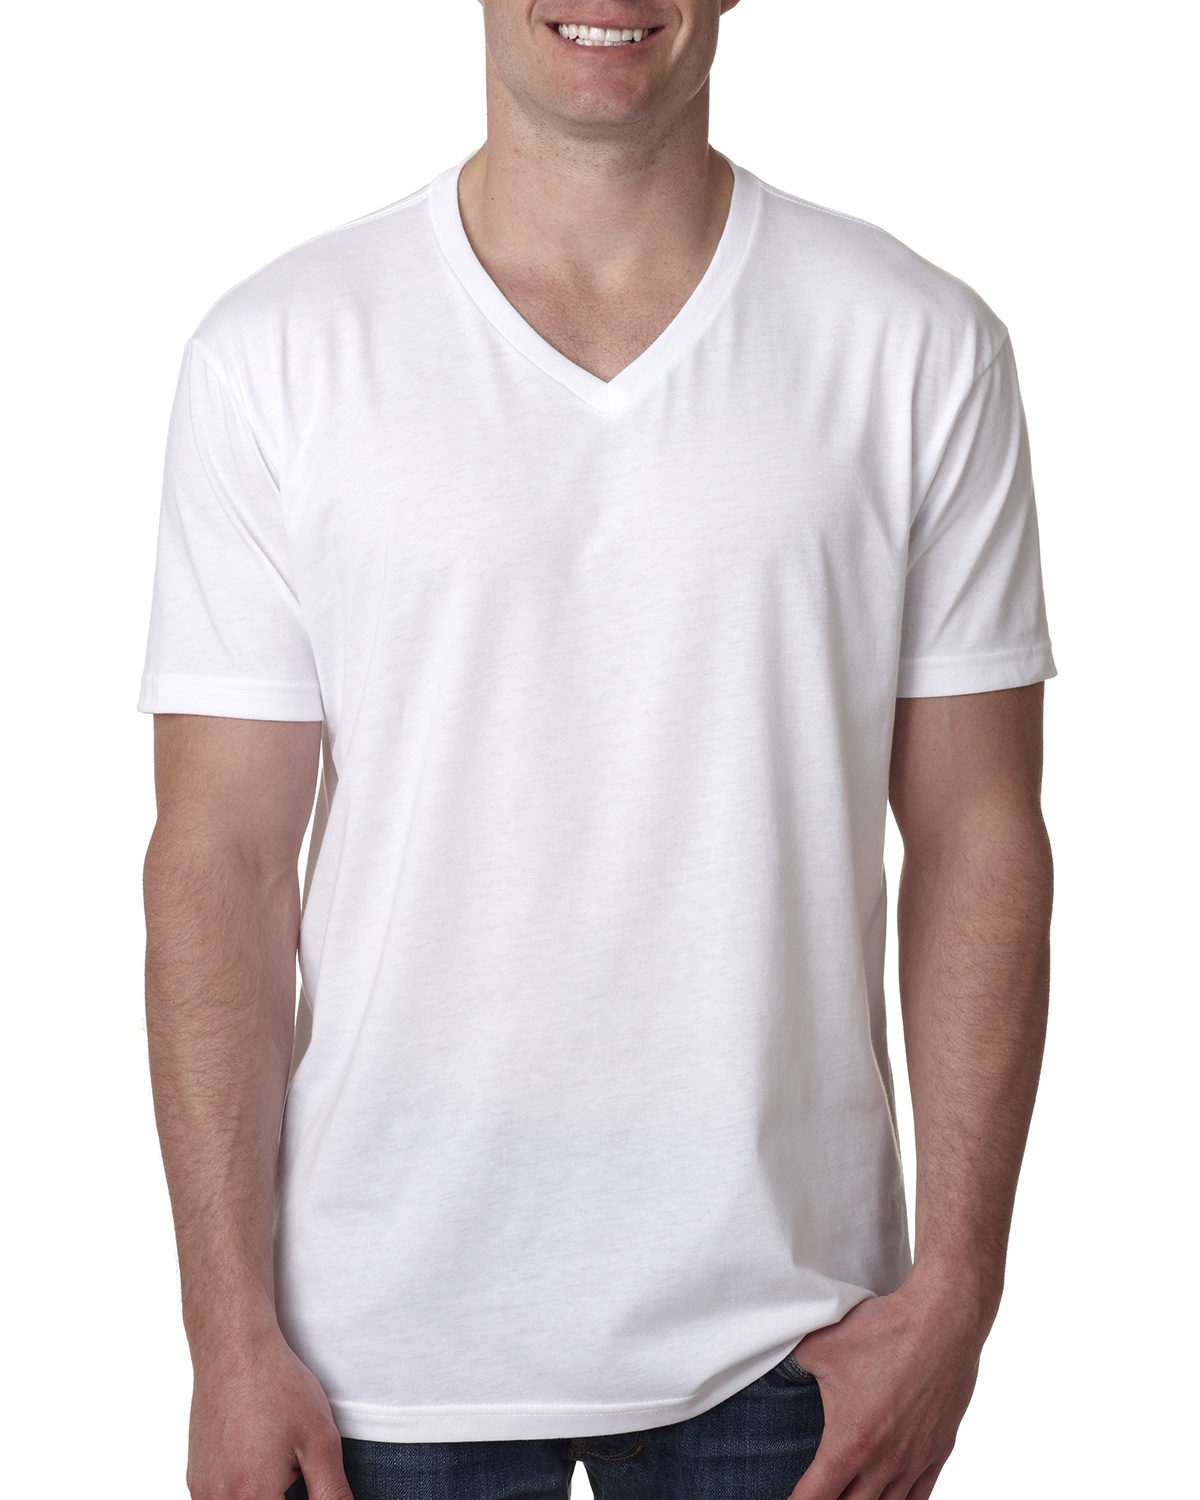 'Next Level 6240 Fitted CVC V Neck Cotton Polyester T-Shirt'